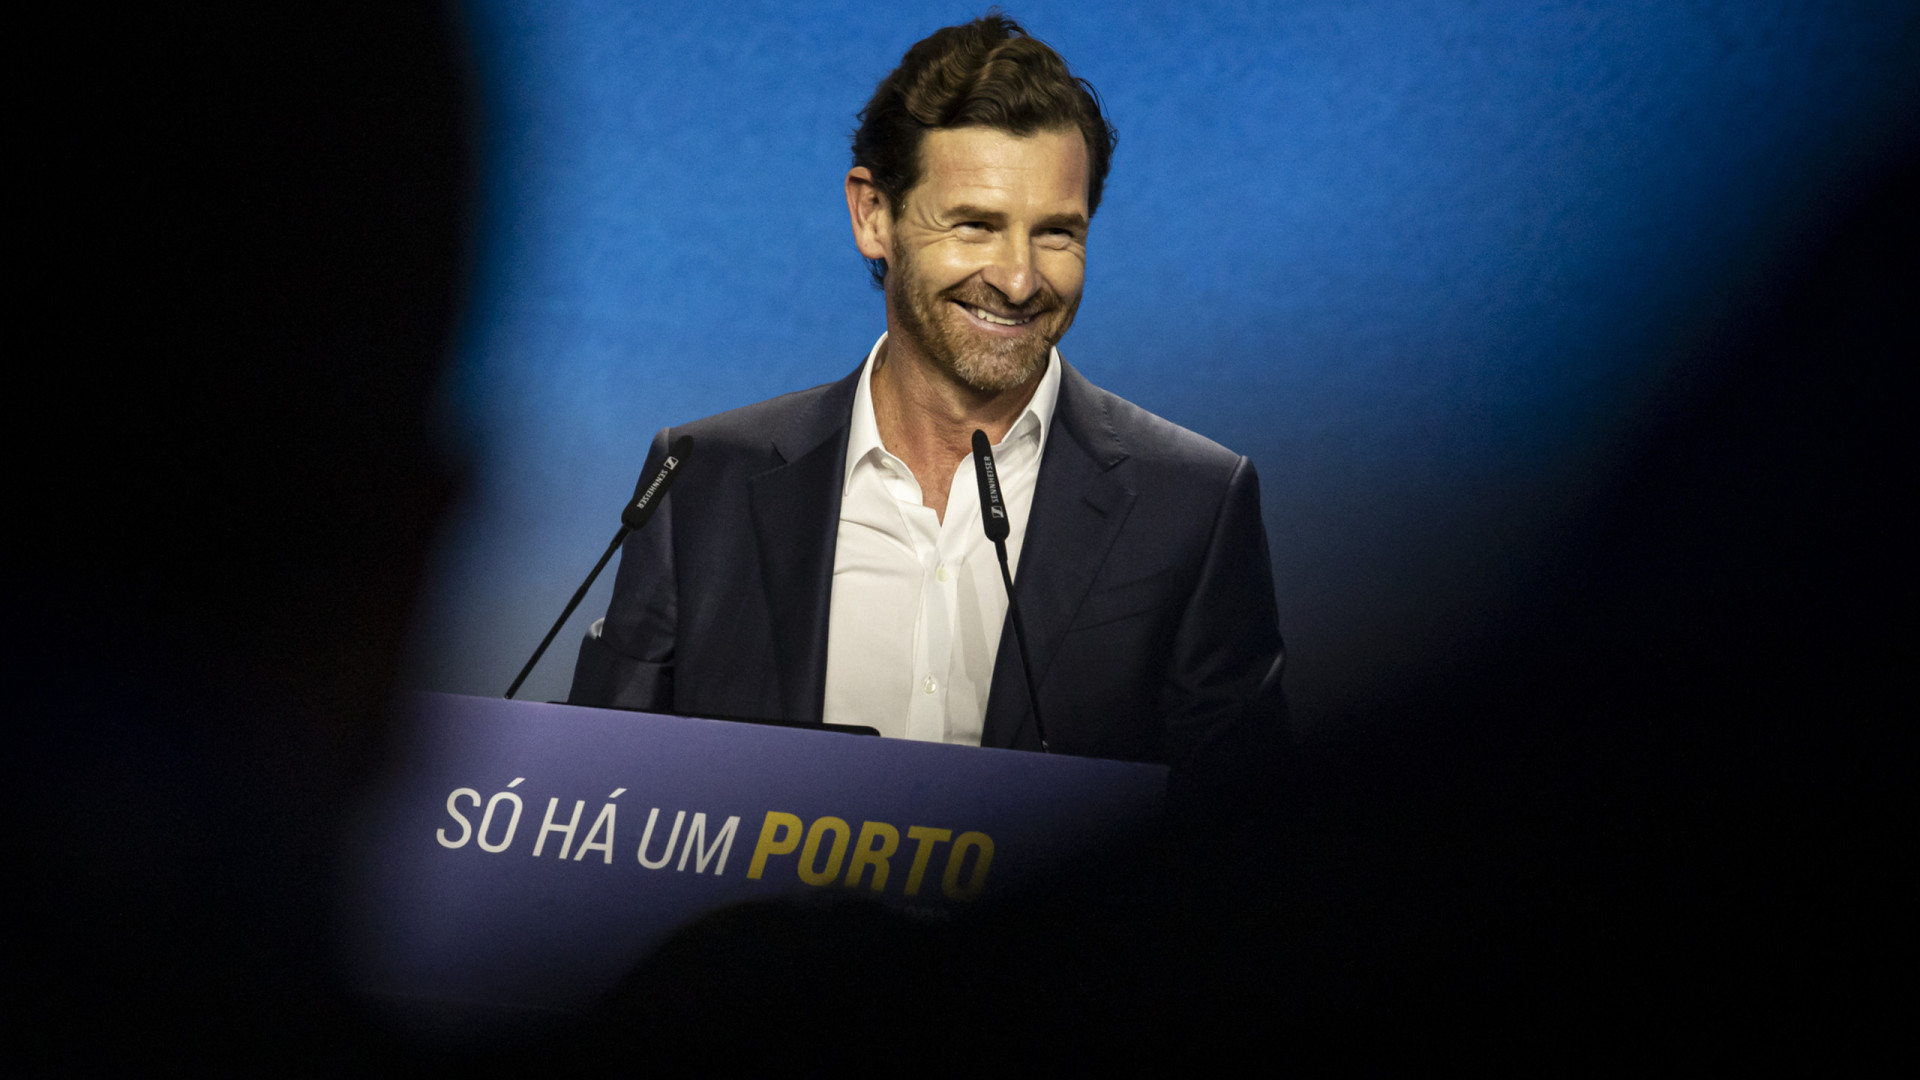 André Villas-Boas é o novo presidente do FC Porto: "Noite histórica"